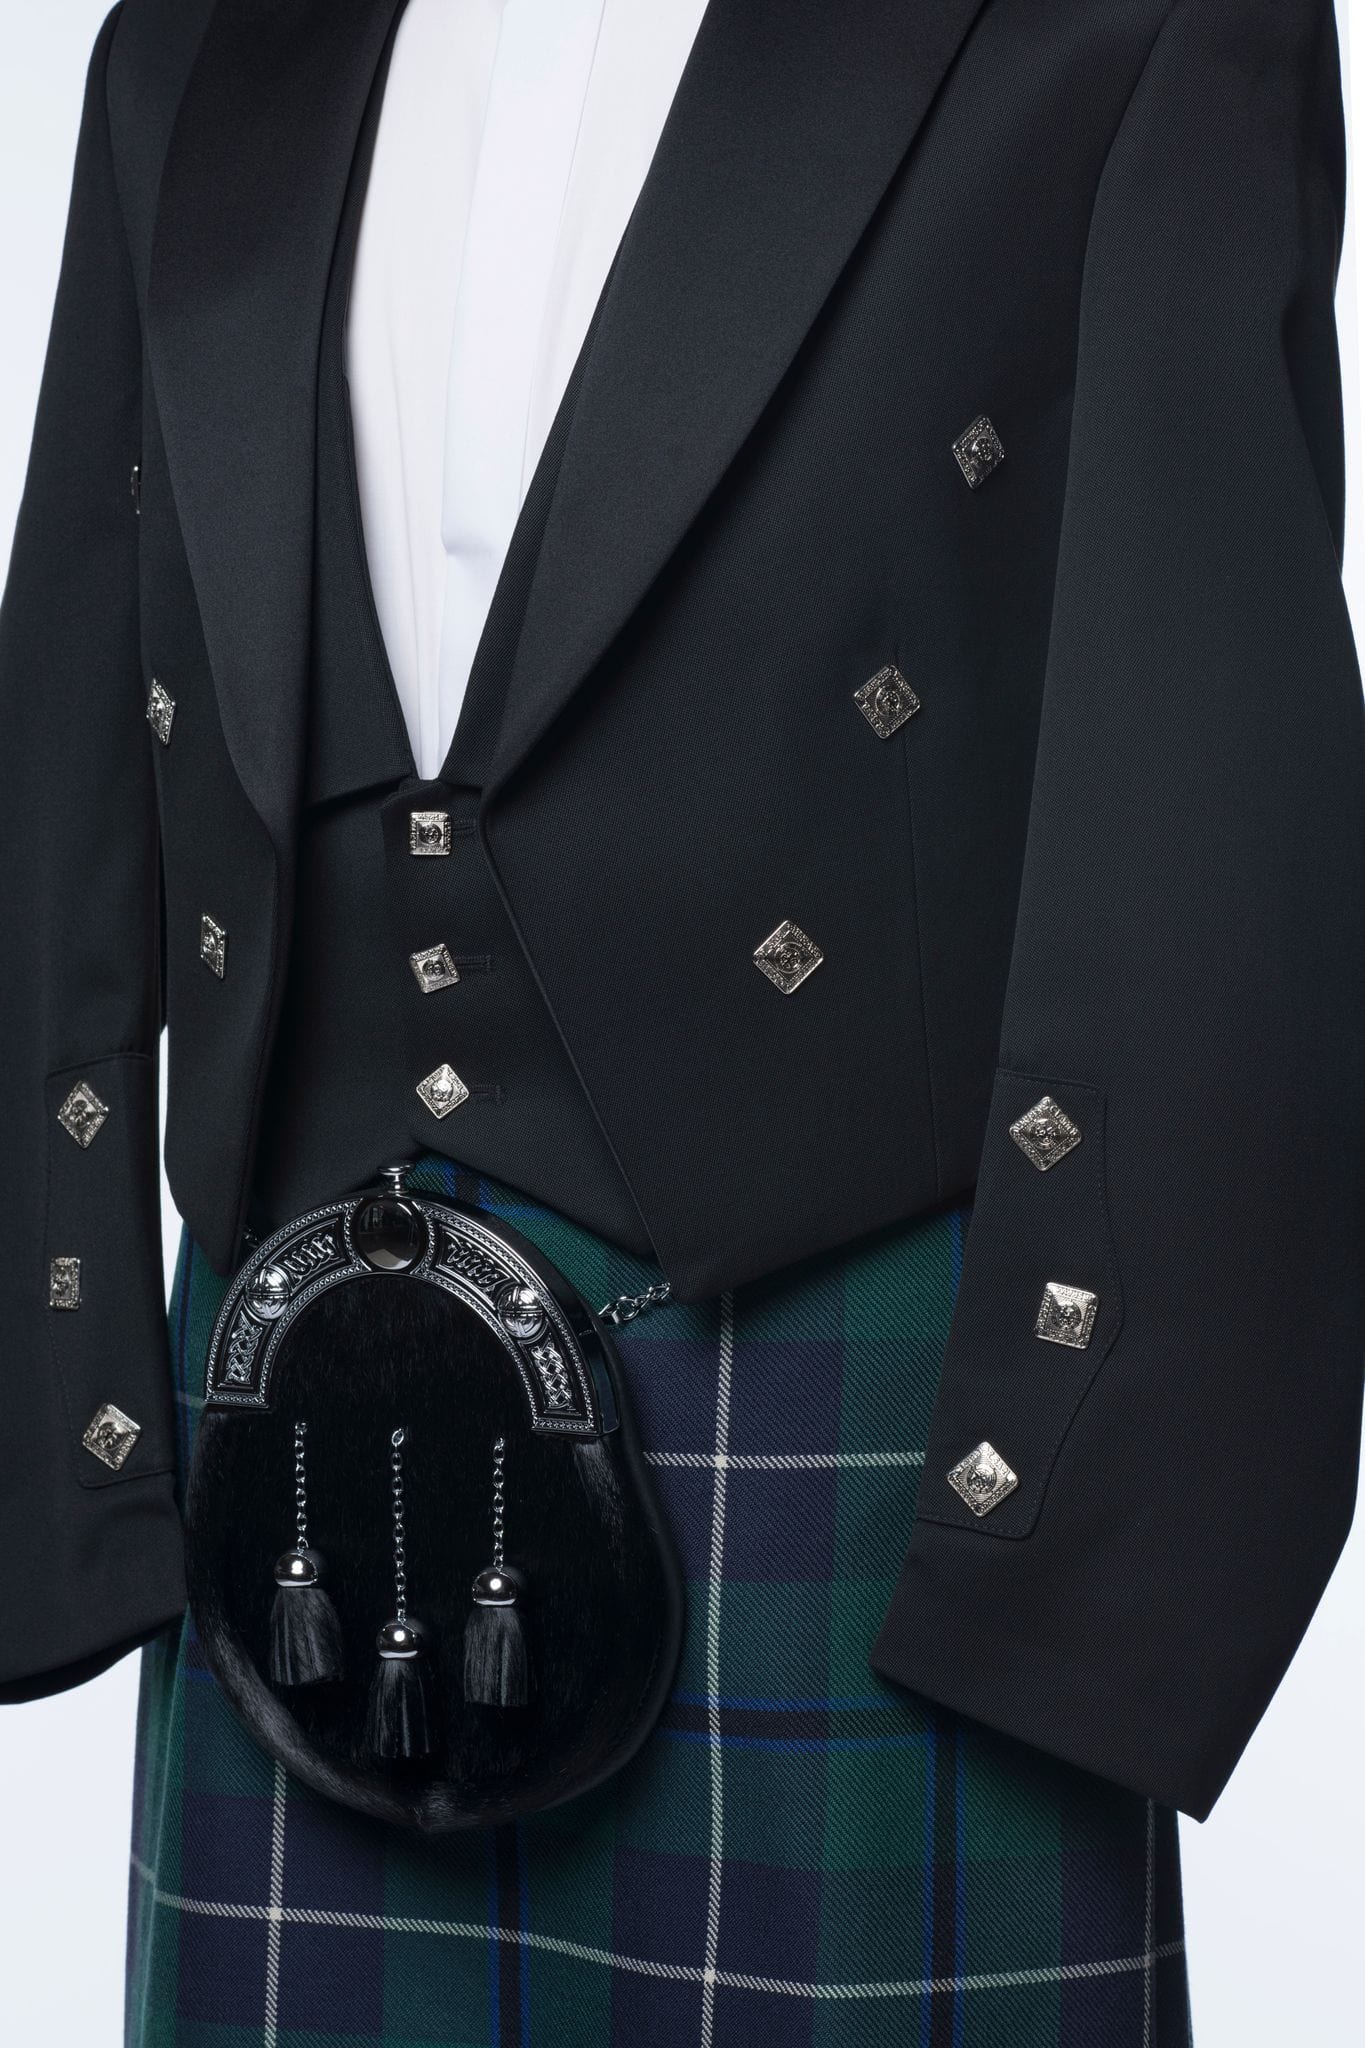 Prince Charlie Kilt Outfit - MacGregor and MacDuff